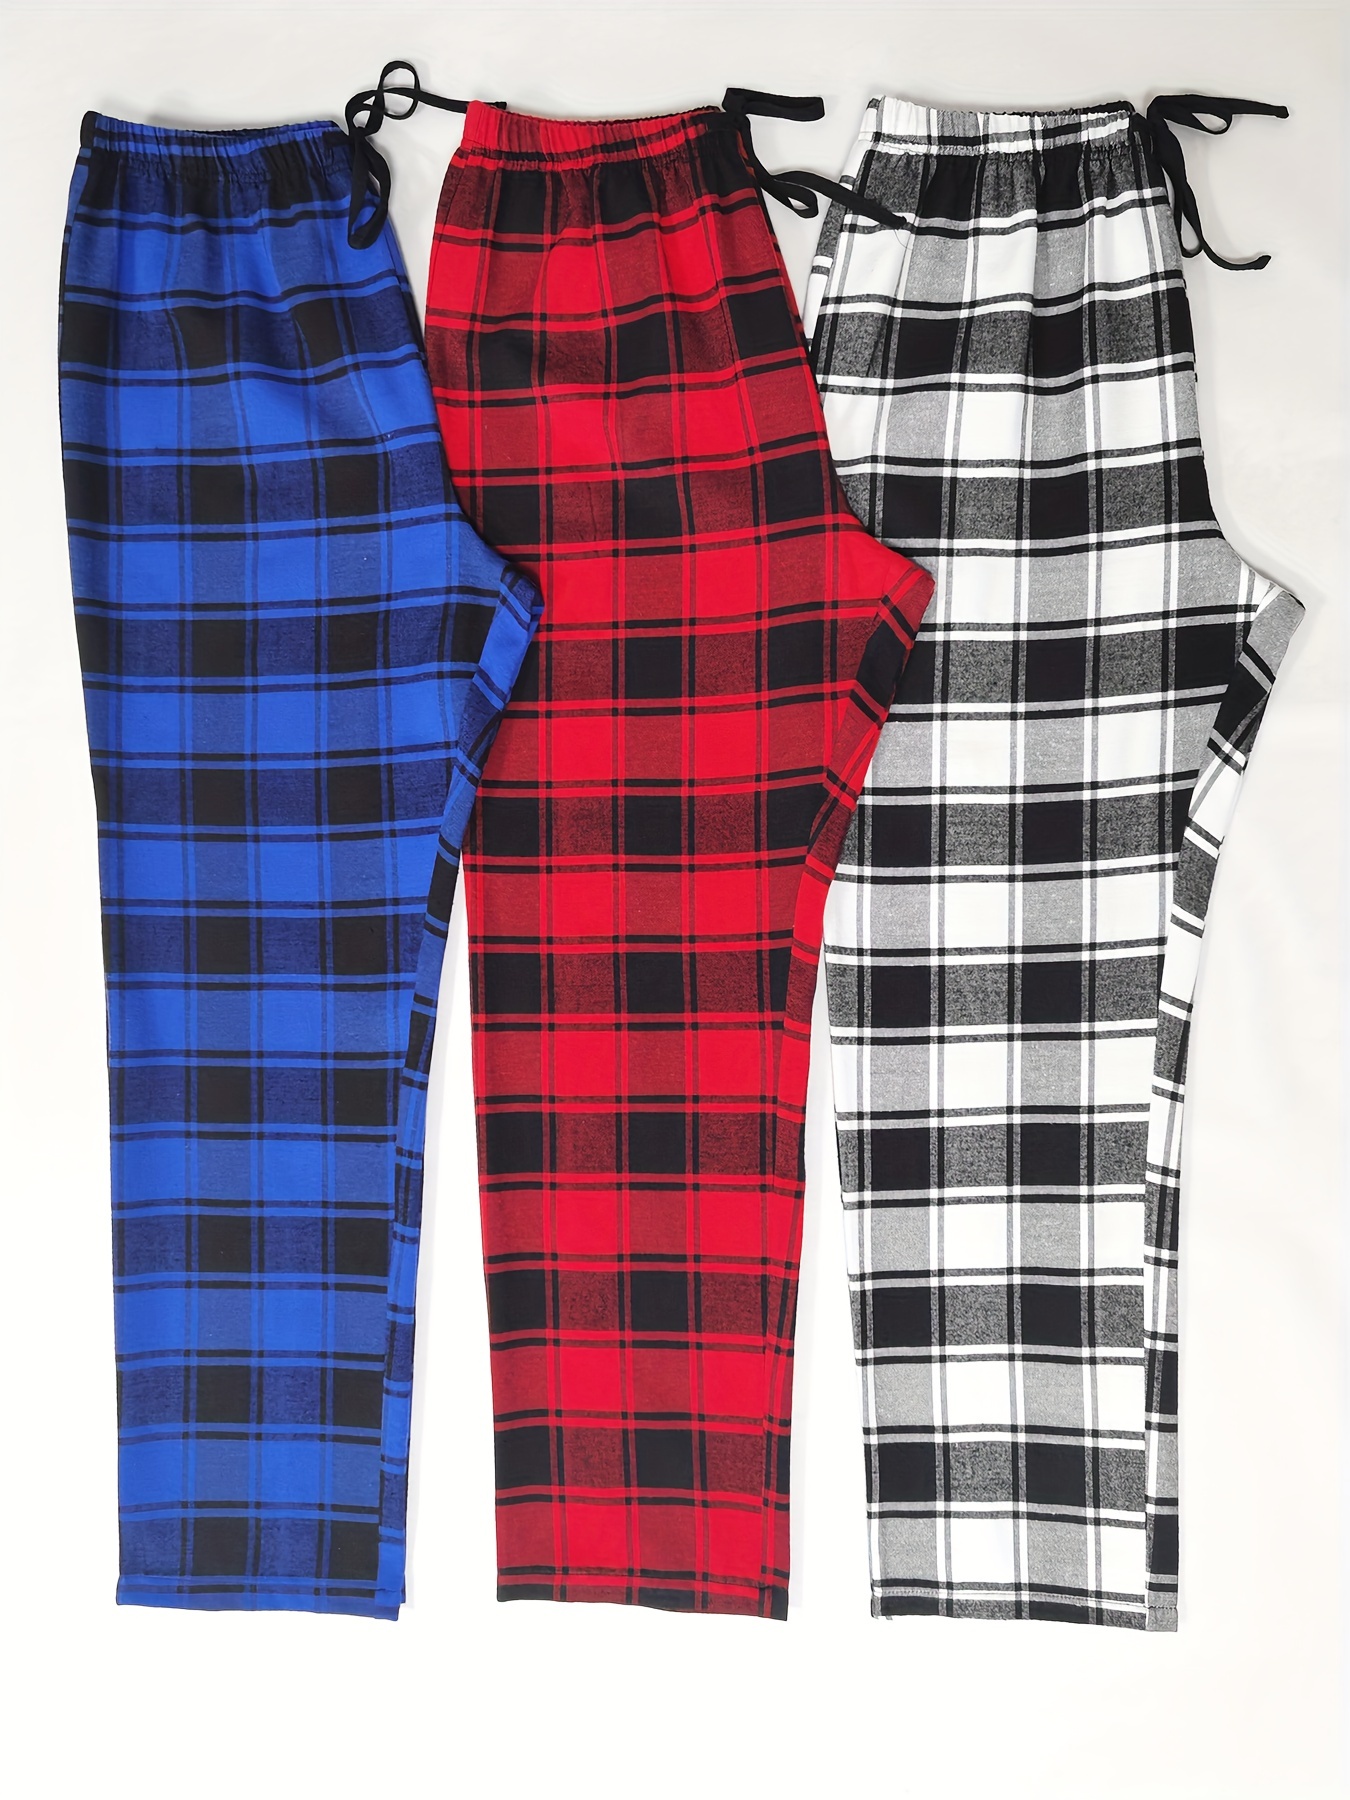 Vulcanodon Mens Cotton Pajama Pants, Lightweight Sleep Pants with Pockets  Soft Lounge Pajama Pants for Men Plaid Pj Bottoms, Hunter Green-plaid, XXL  price in Saudi Arabia,  Saudi Arabia